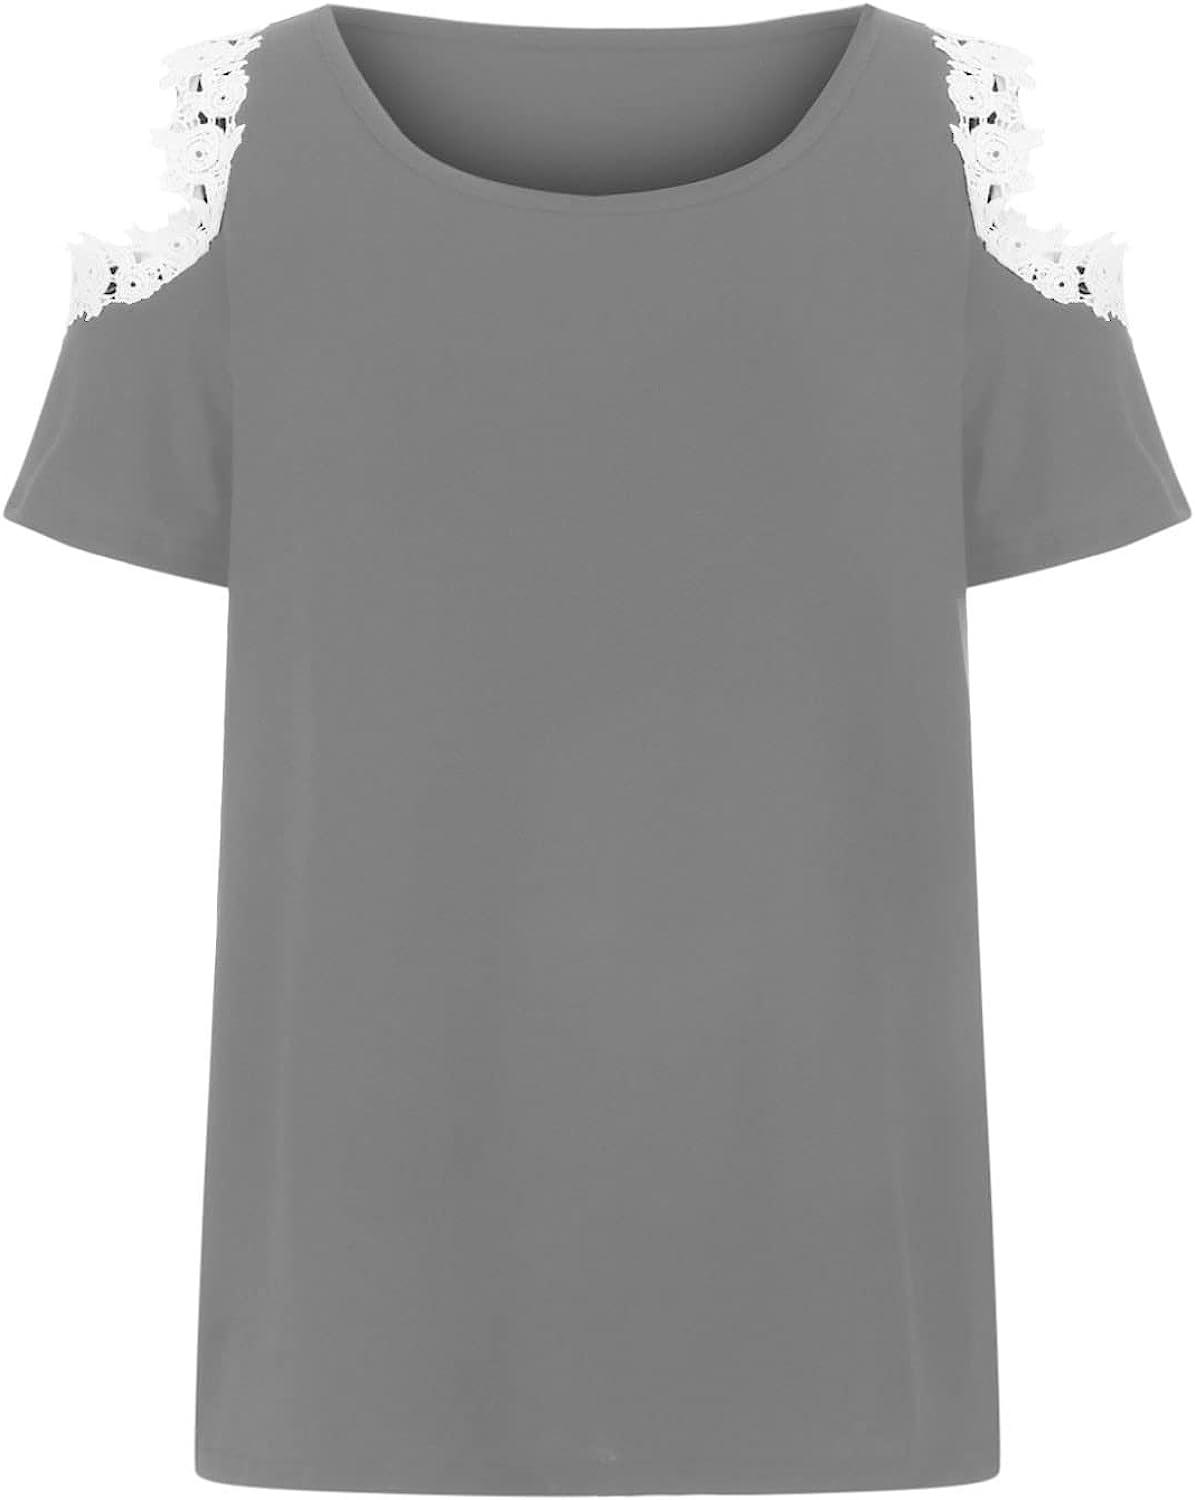  Plus Size Tops for Women, Cold Shoulder Summer T Shirt